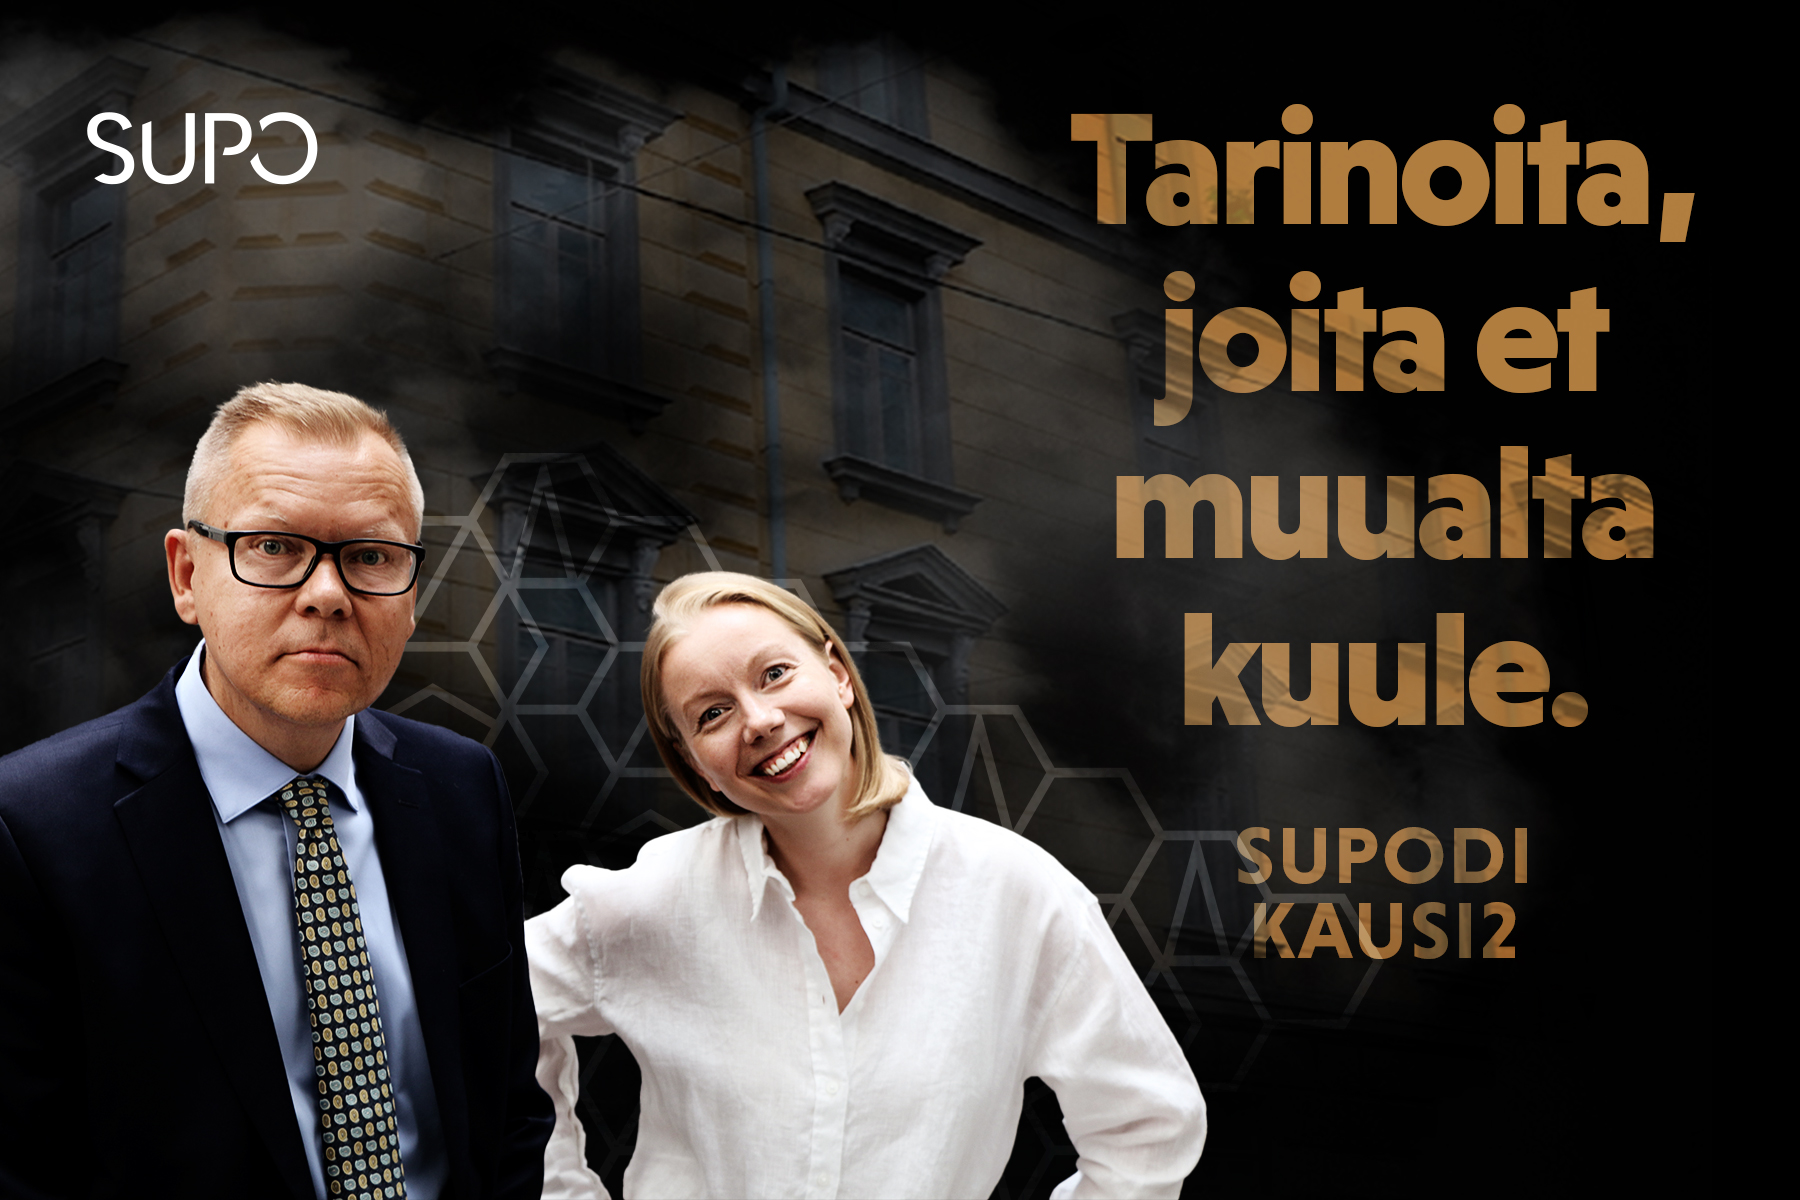 Jyri Rantala and Saana Nilsson from Supo.